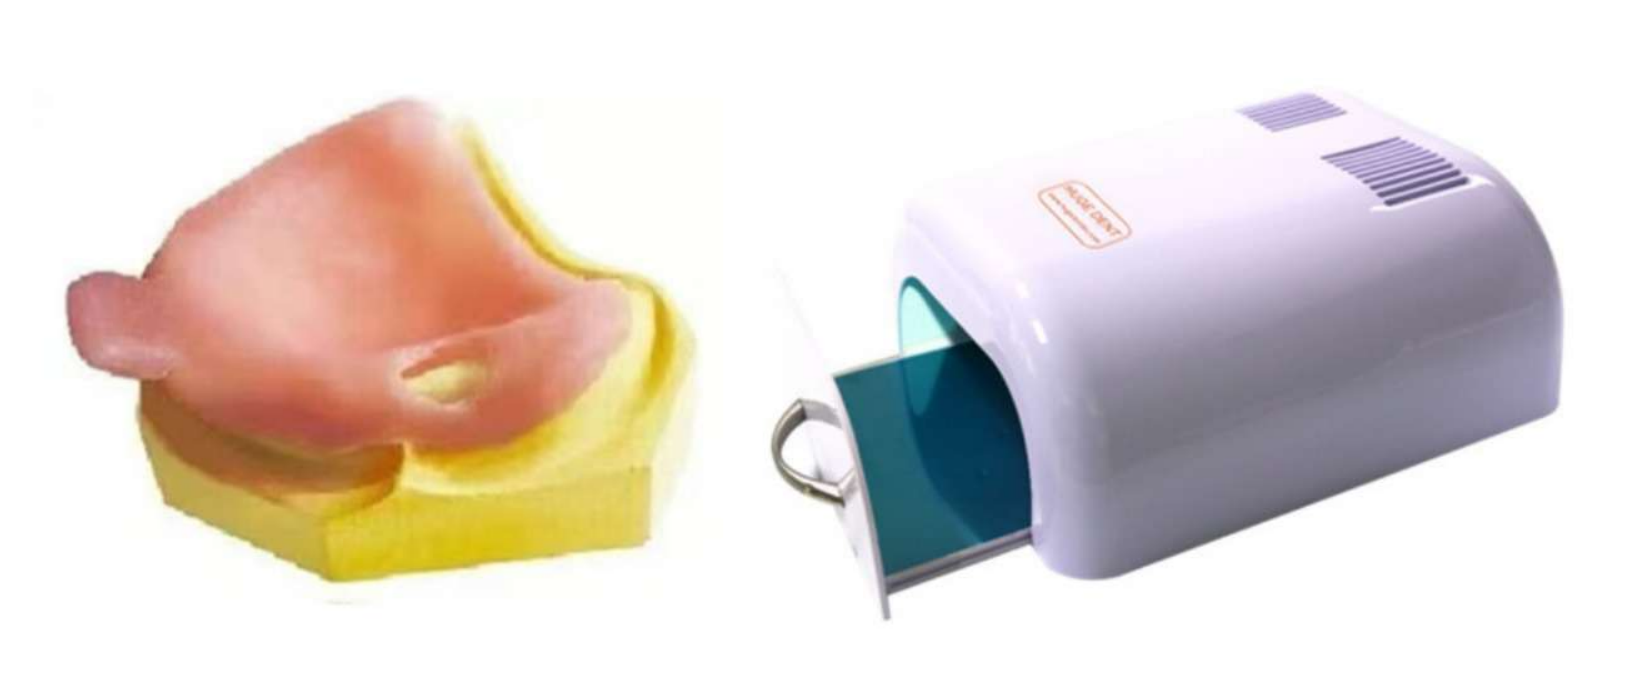 orthodontic dental supplies